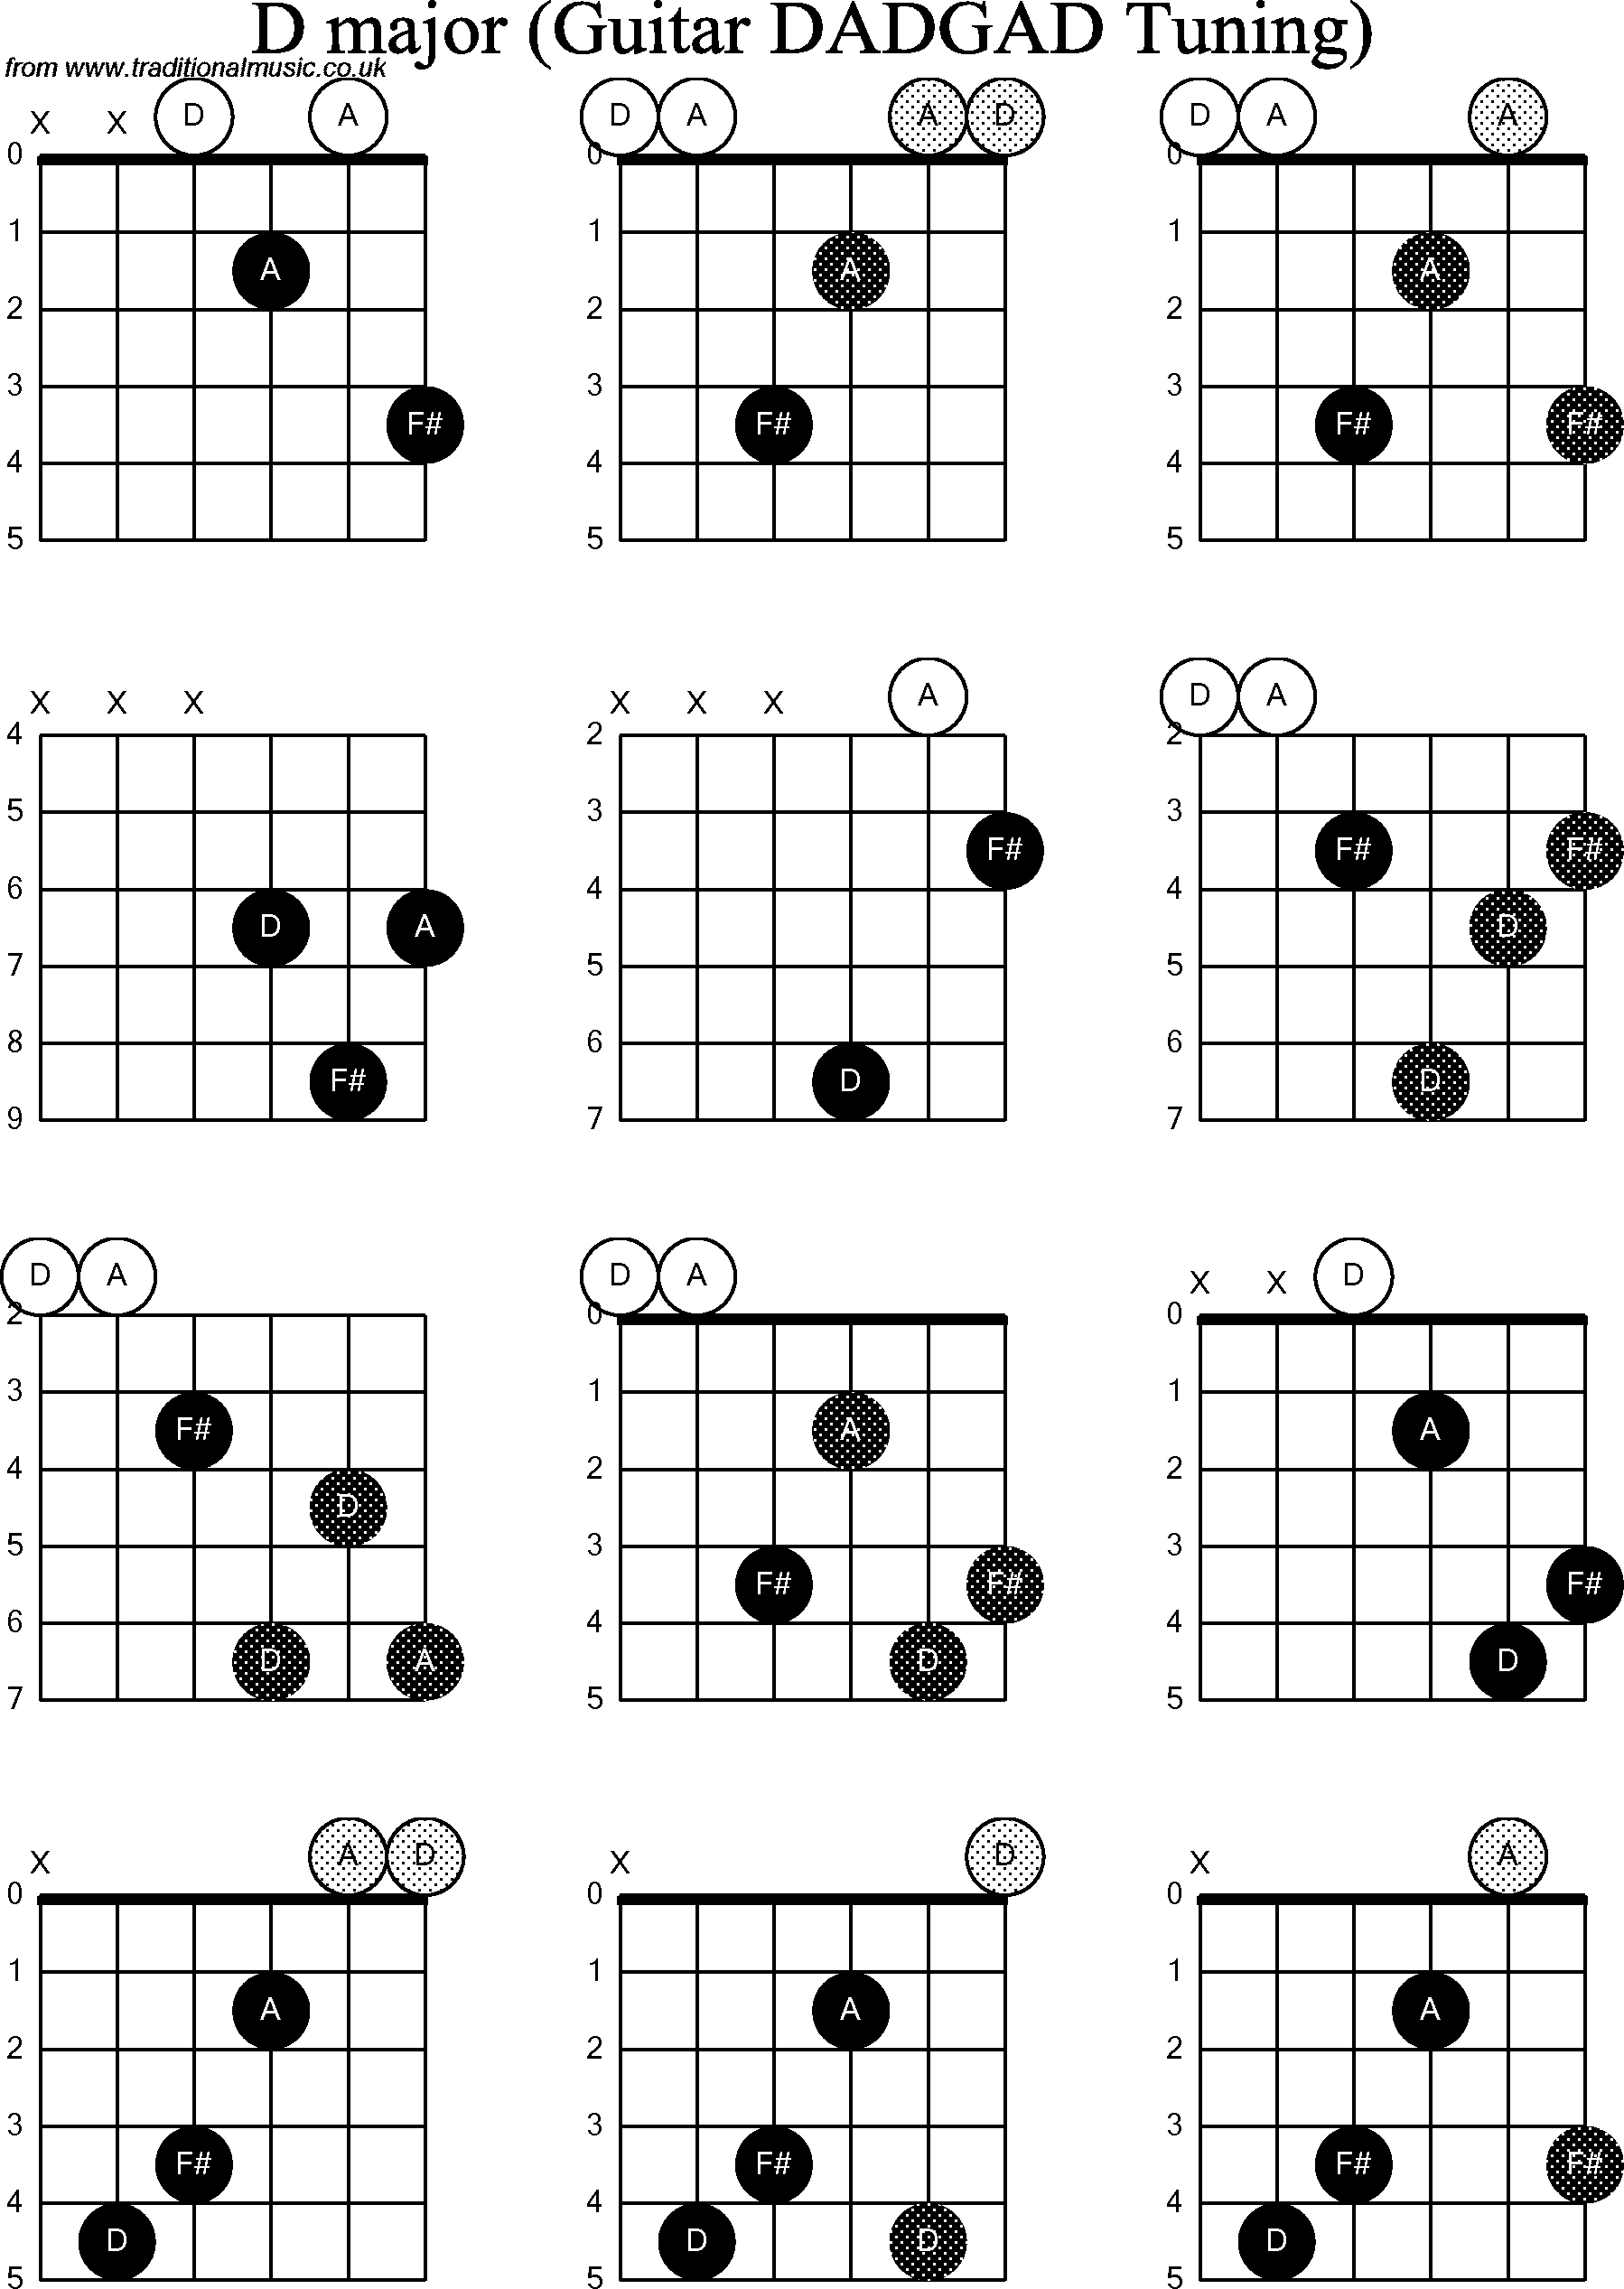 Chord Diagrams for D Modal Guitar(DADGAD), D